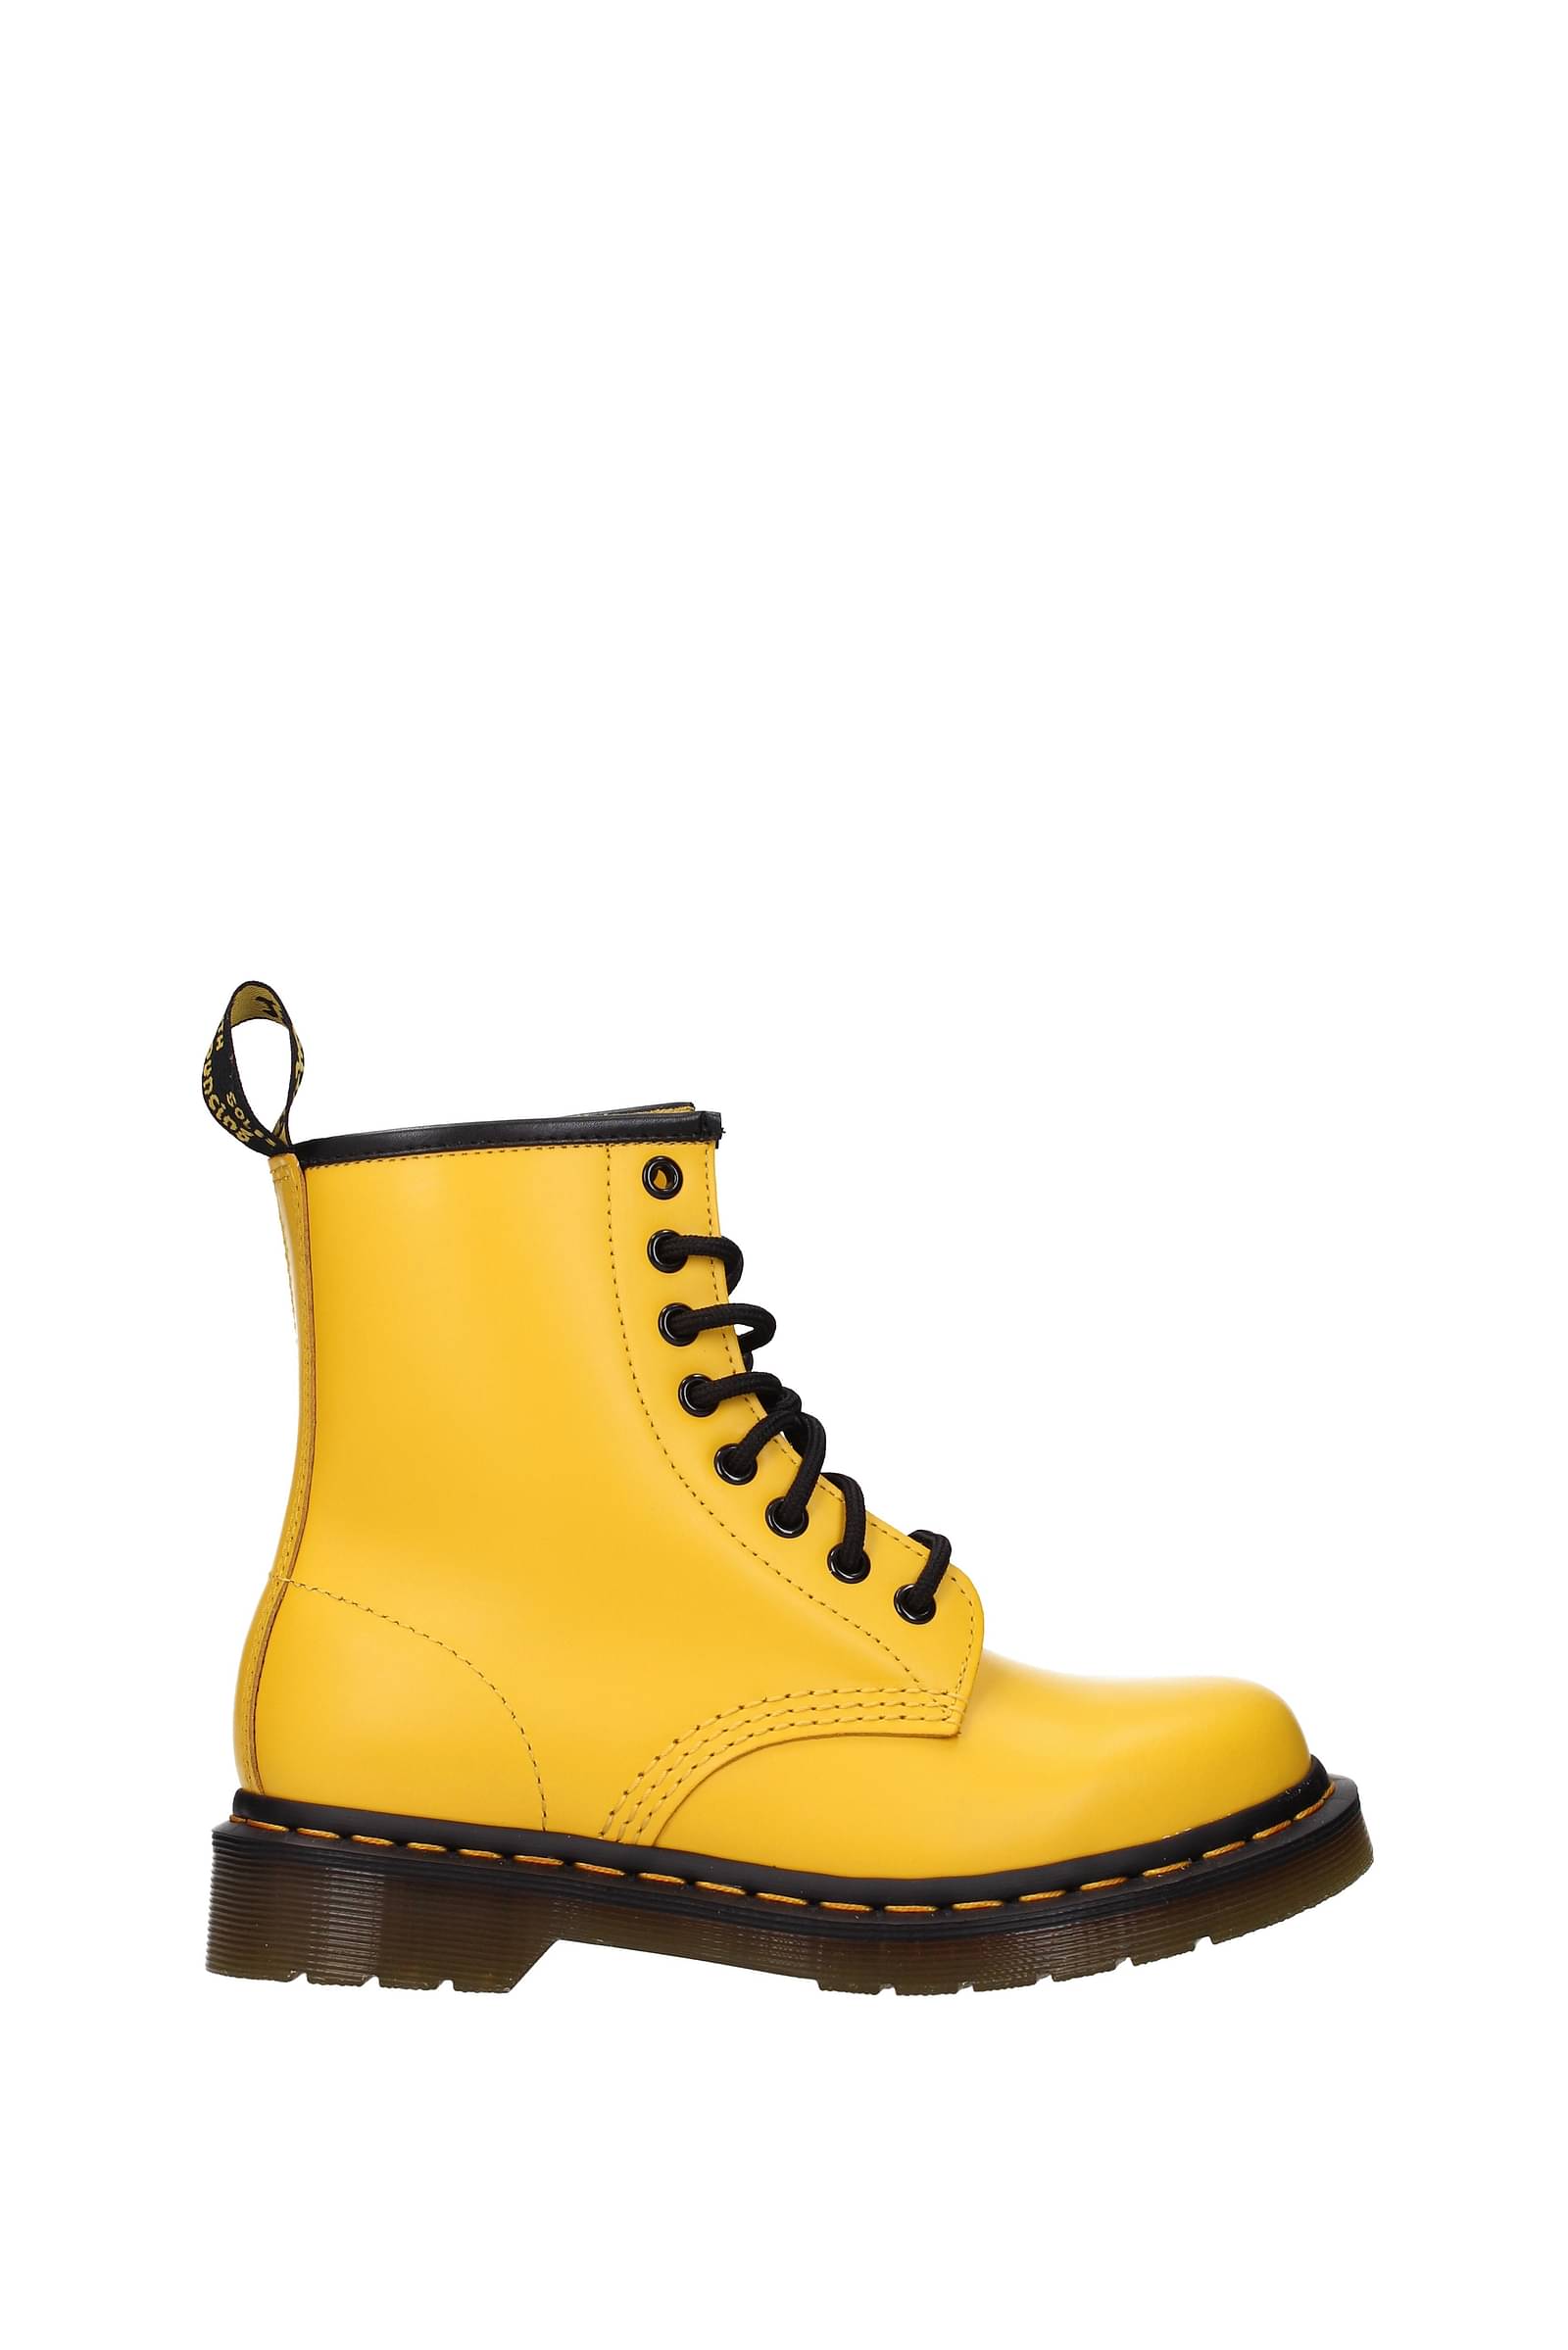 yellow combat boots womens